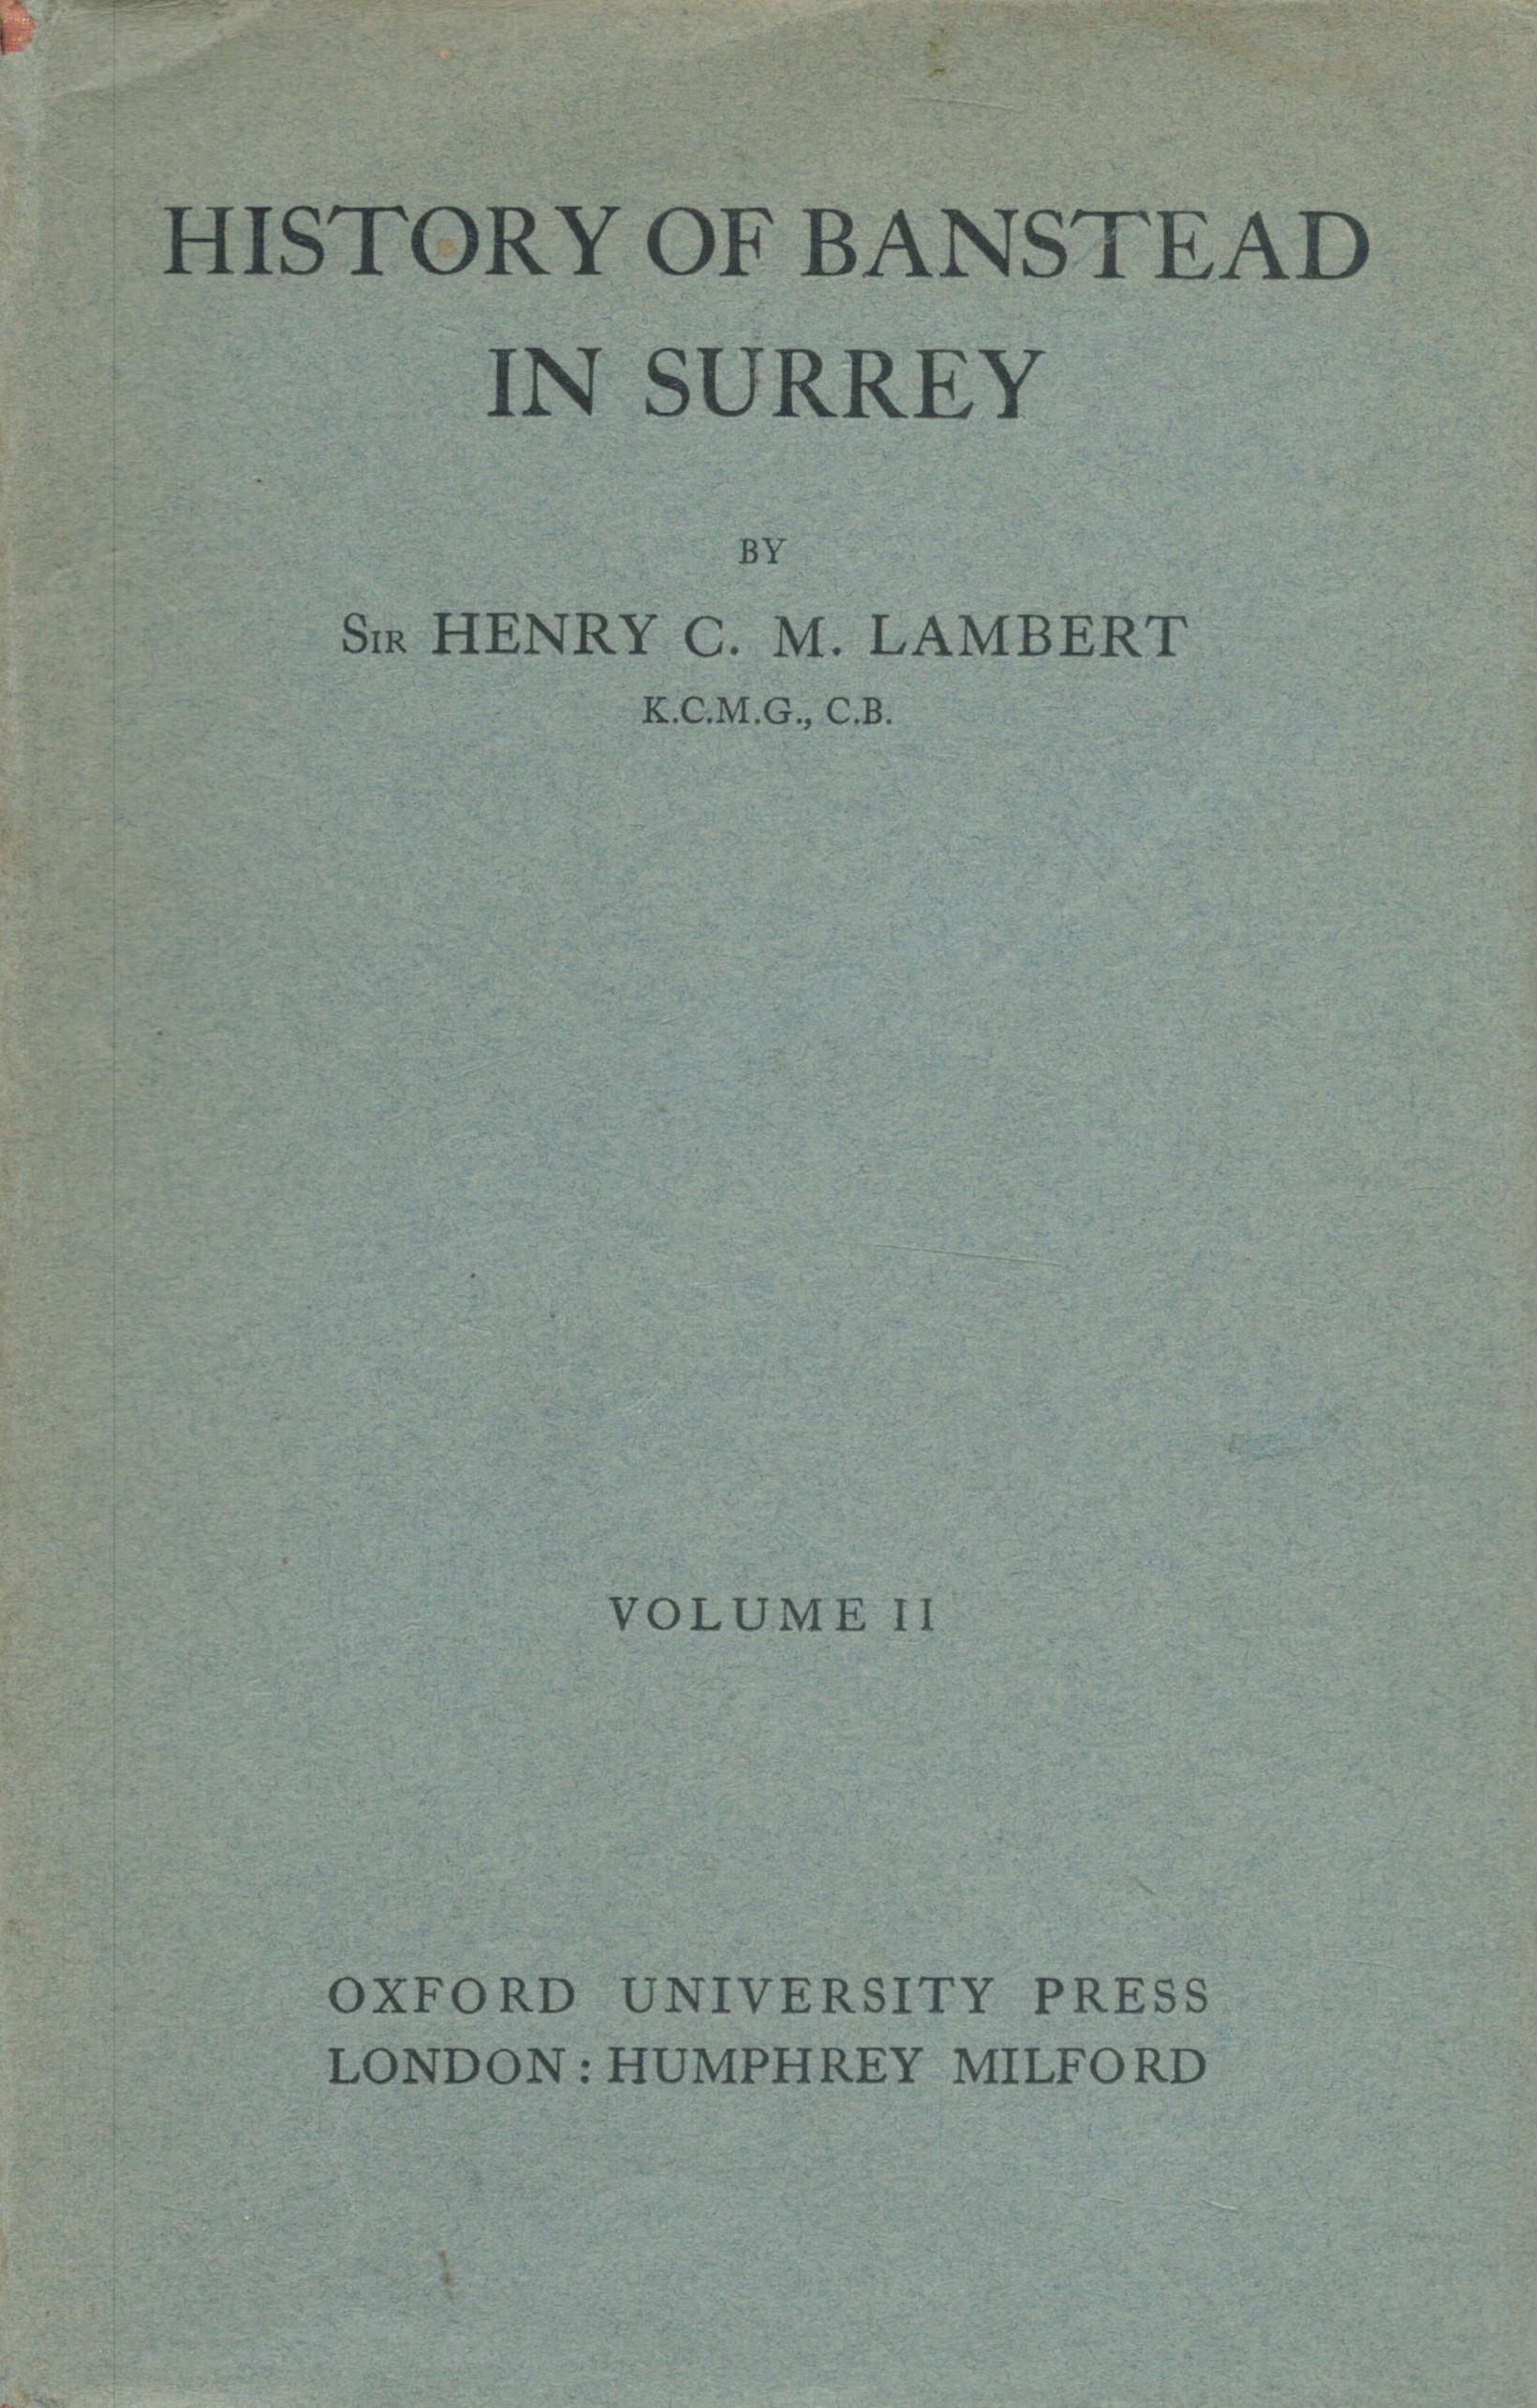 History of Banstead in Surrey by Sir Henry C M Lambert vol II 1931 edition unknown Hardback Book